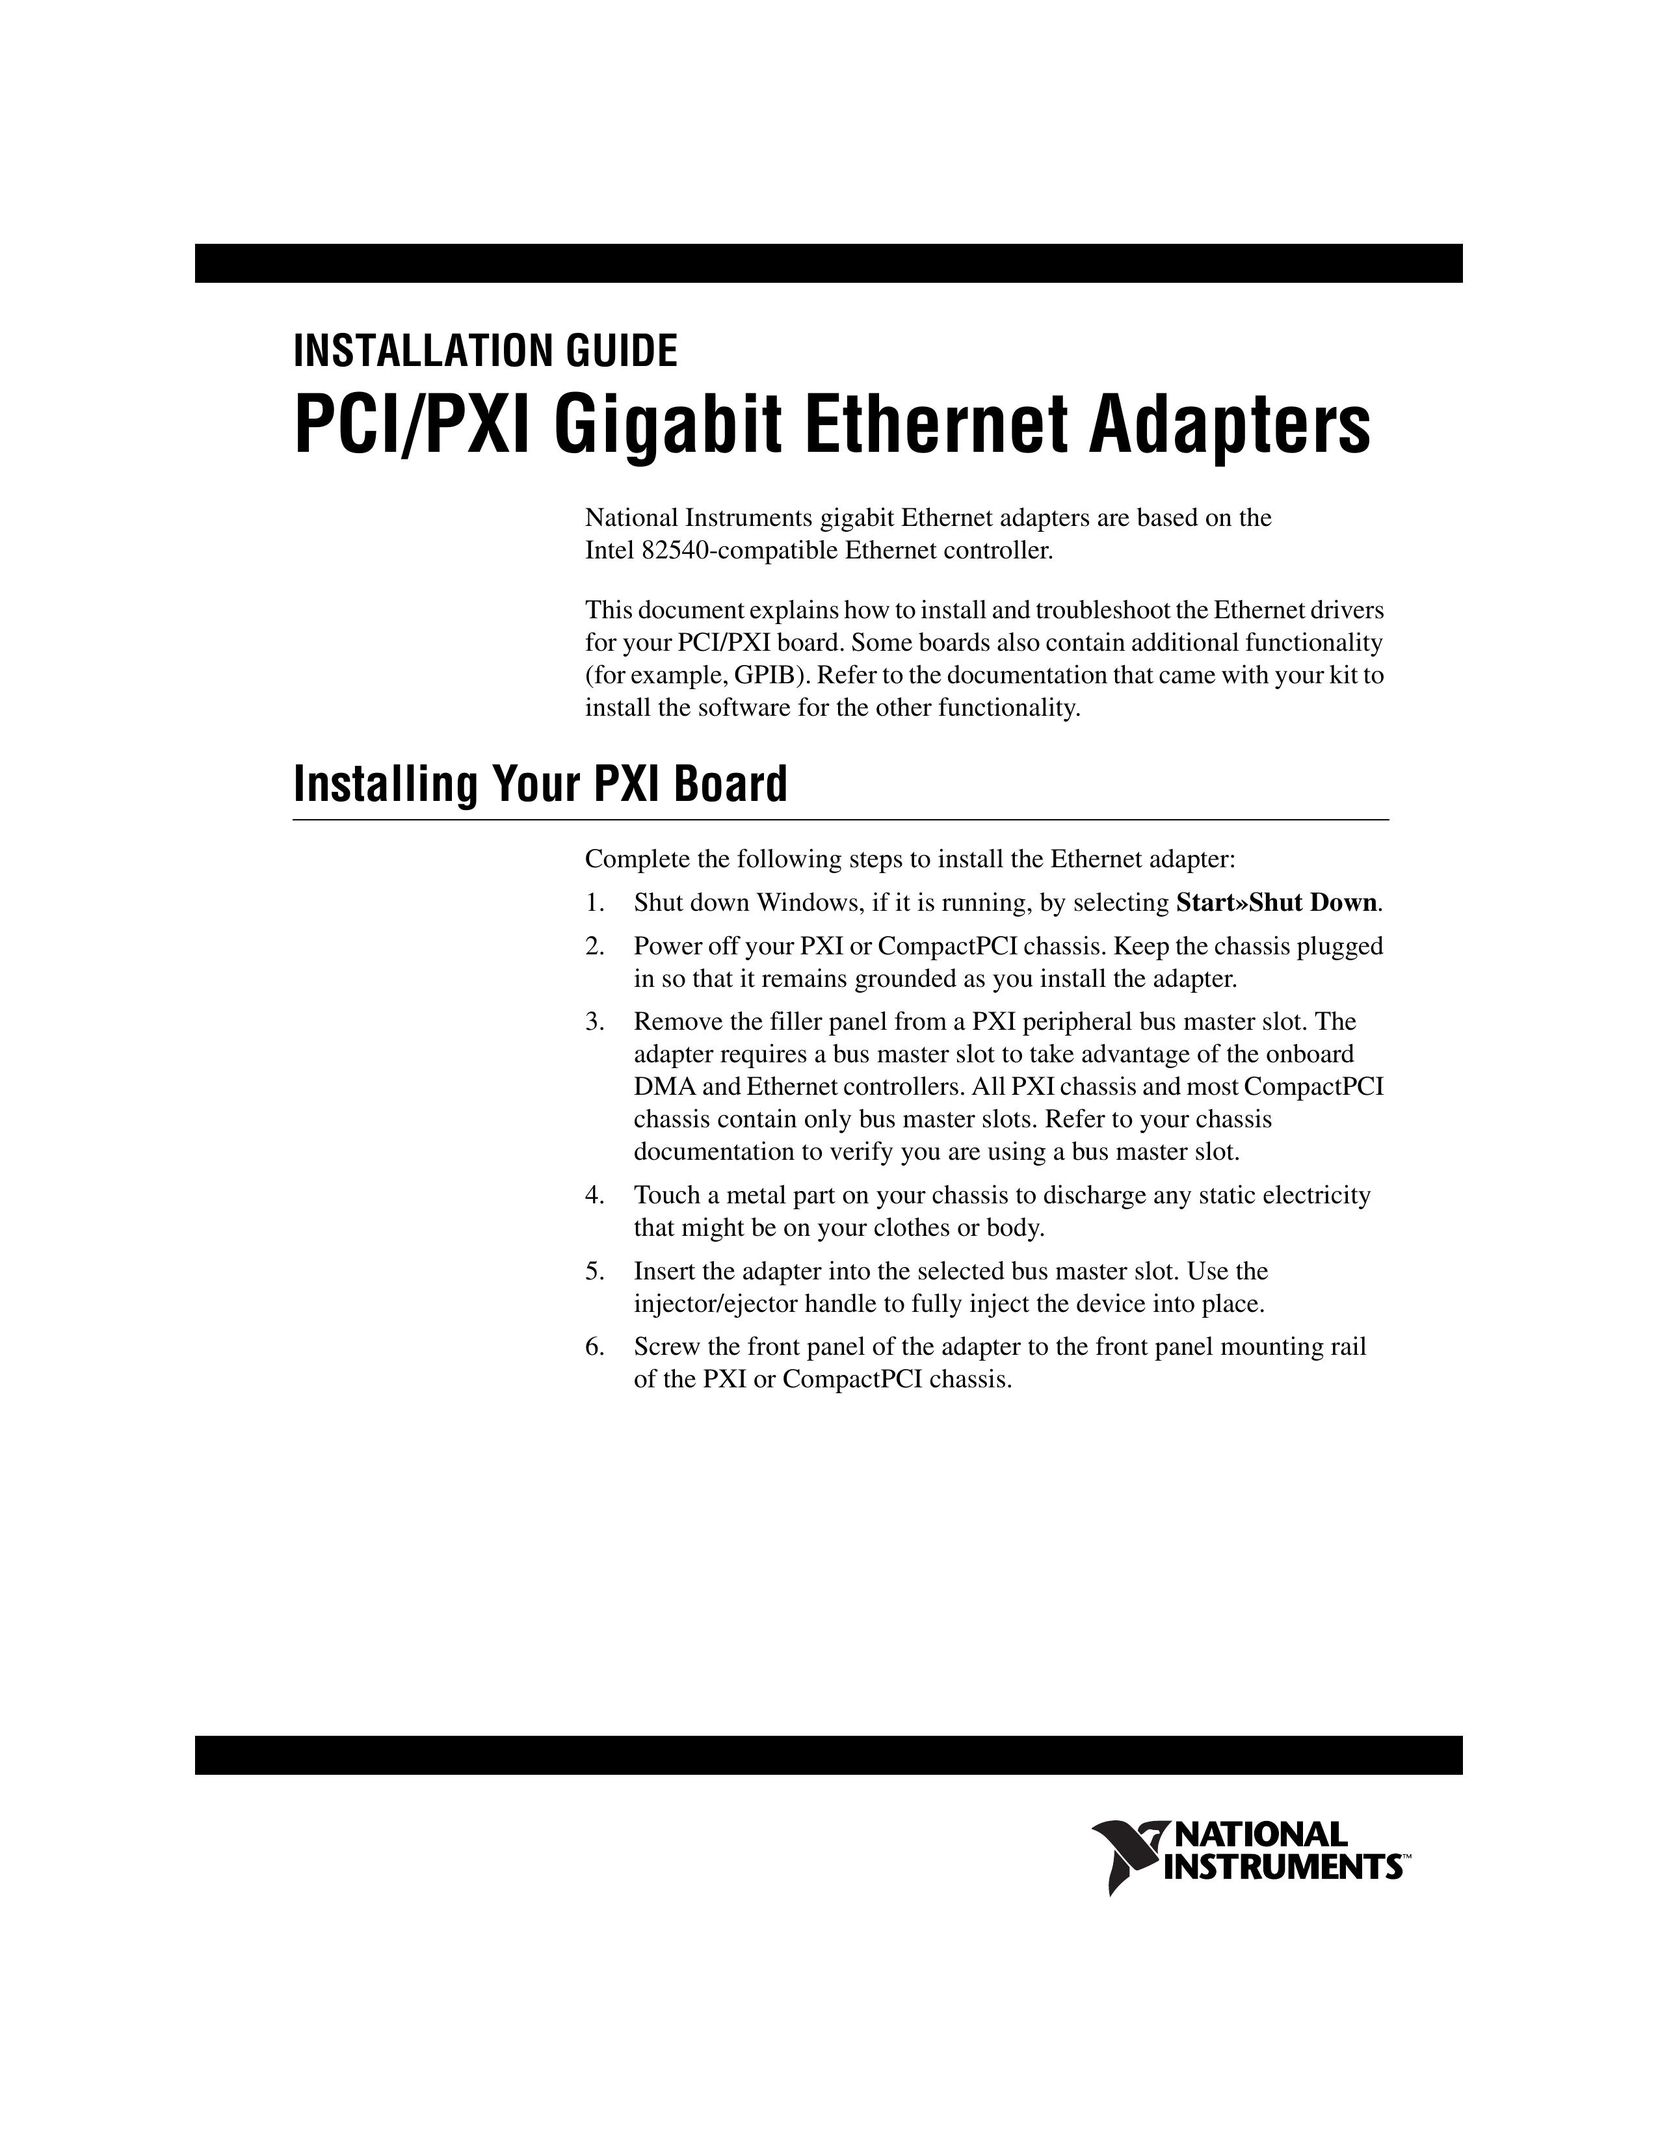 National Instruments Gigabit Ethernet Adapters Network Card User Manual